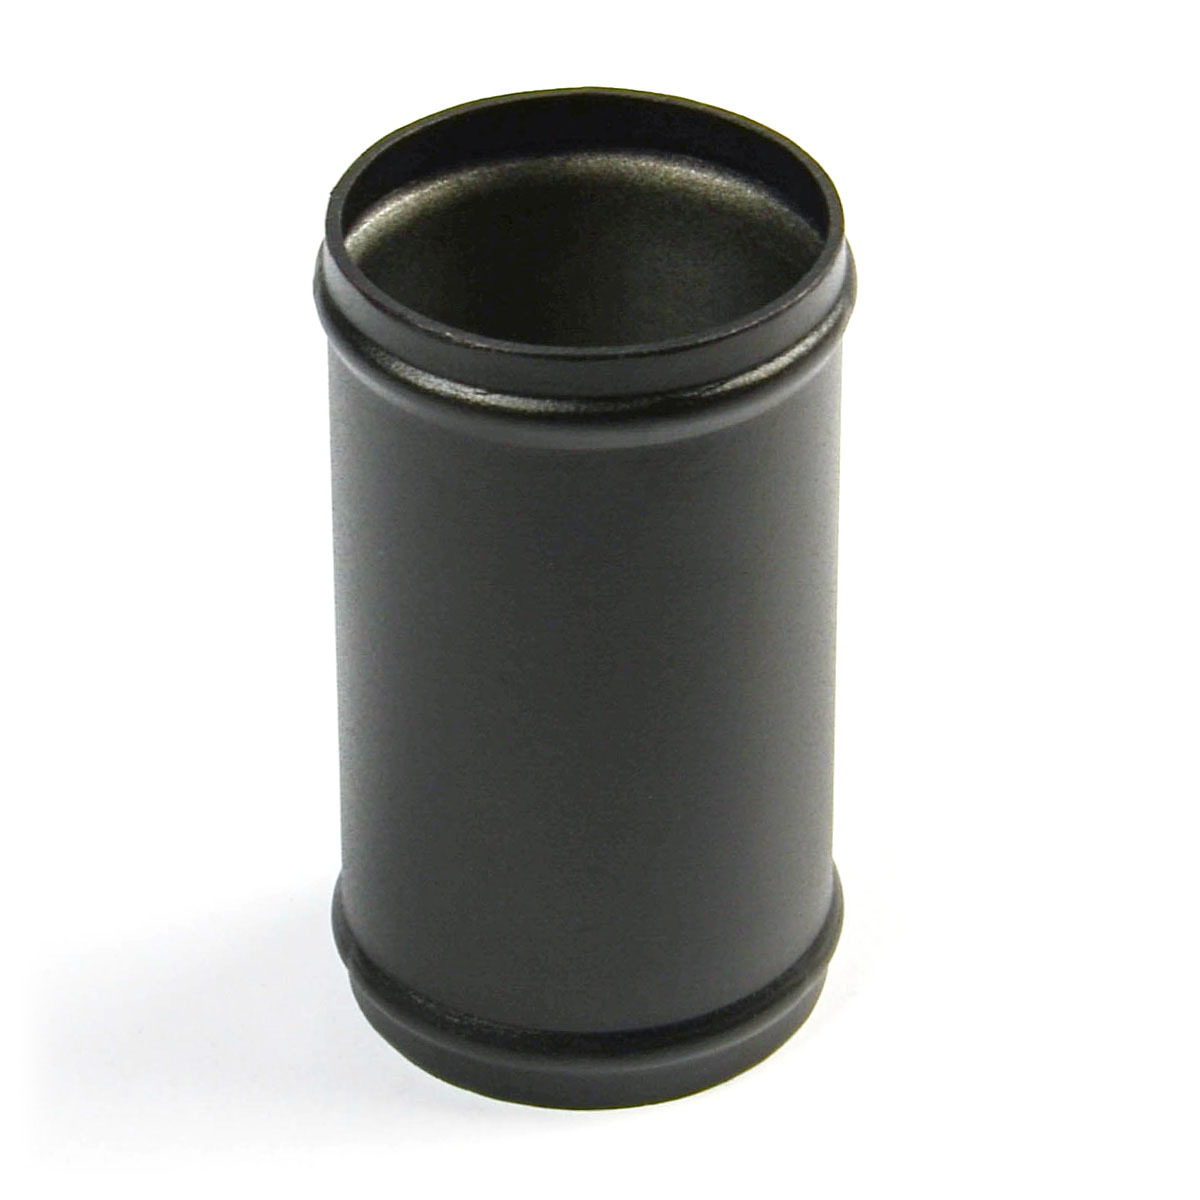 Pipe 76mm Ø x 100mm Aluminium Black Powder Coat